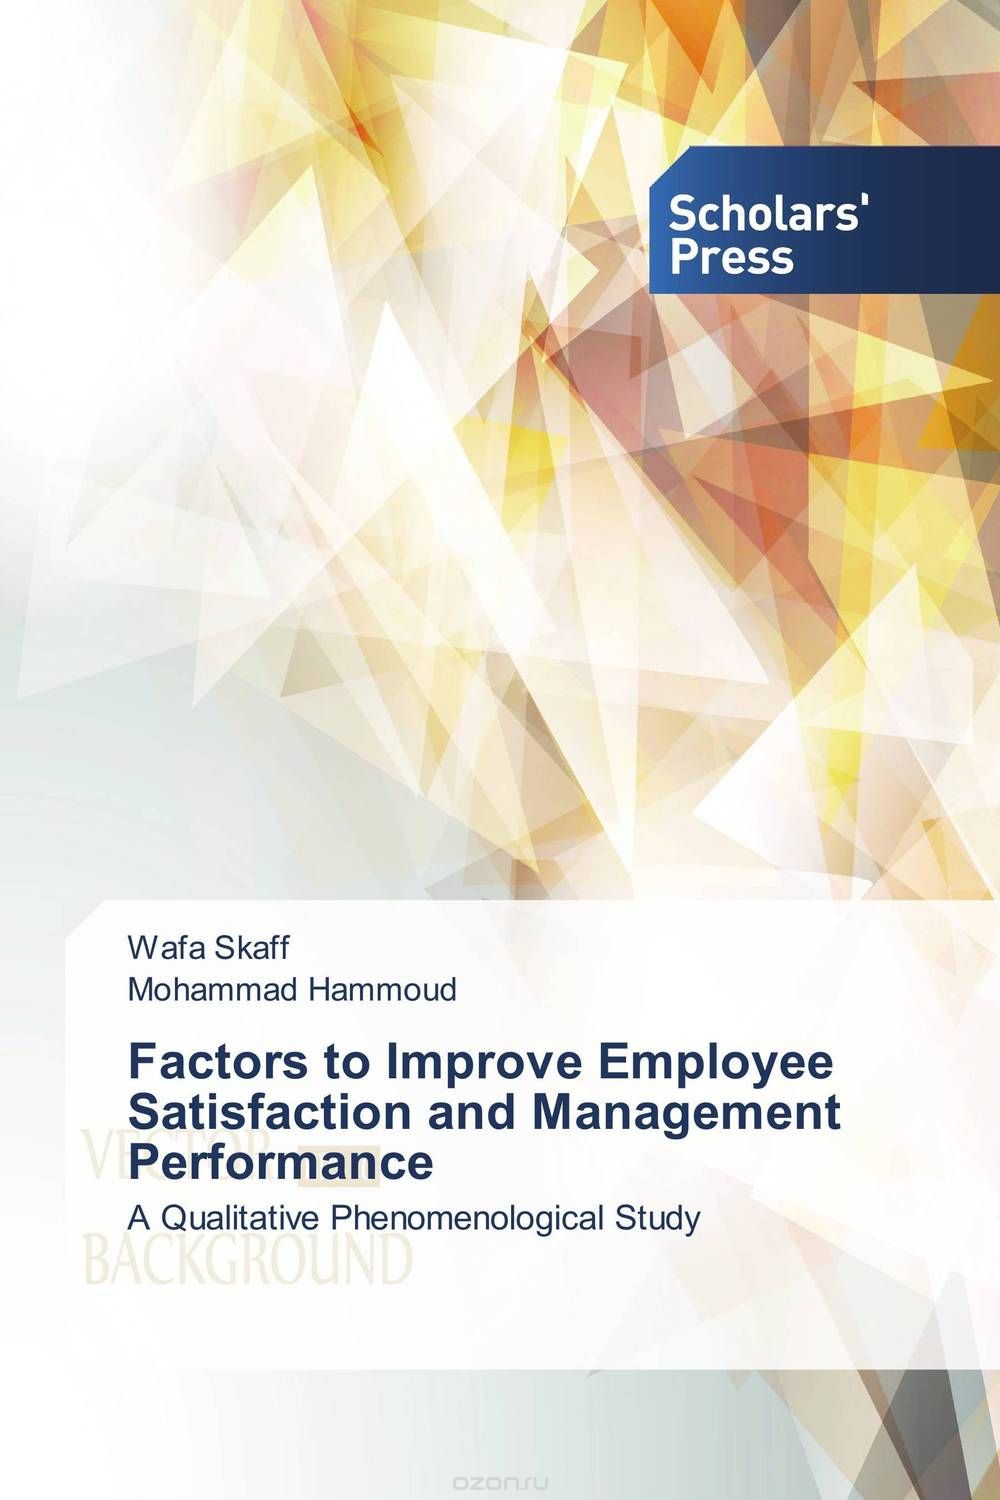 Скачать книгу "Factors to Improve Employee Satisfaction and Management Performance"